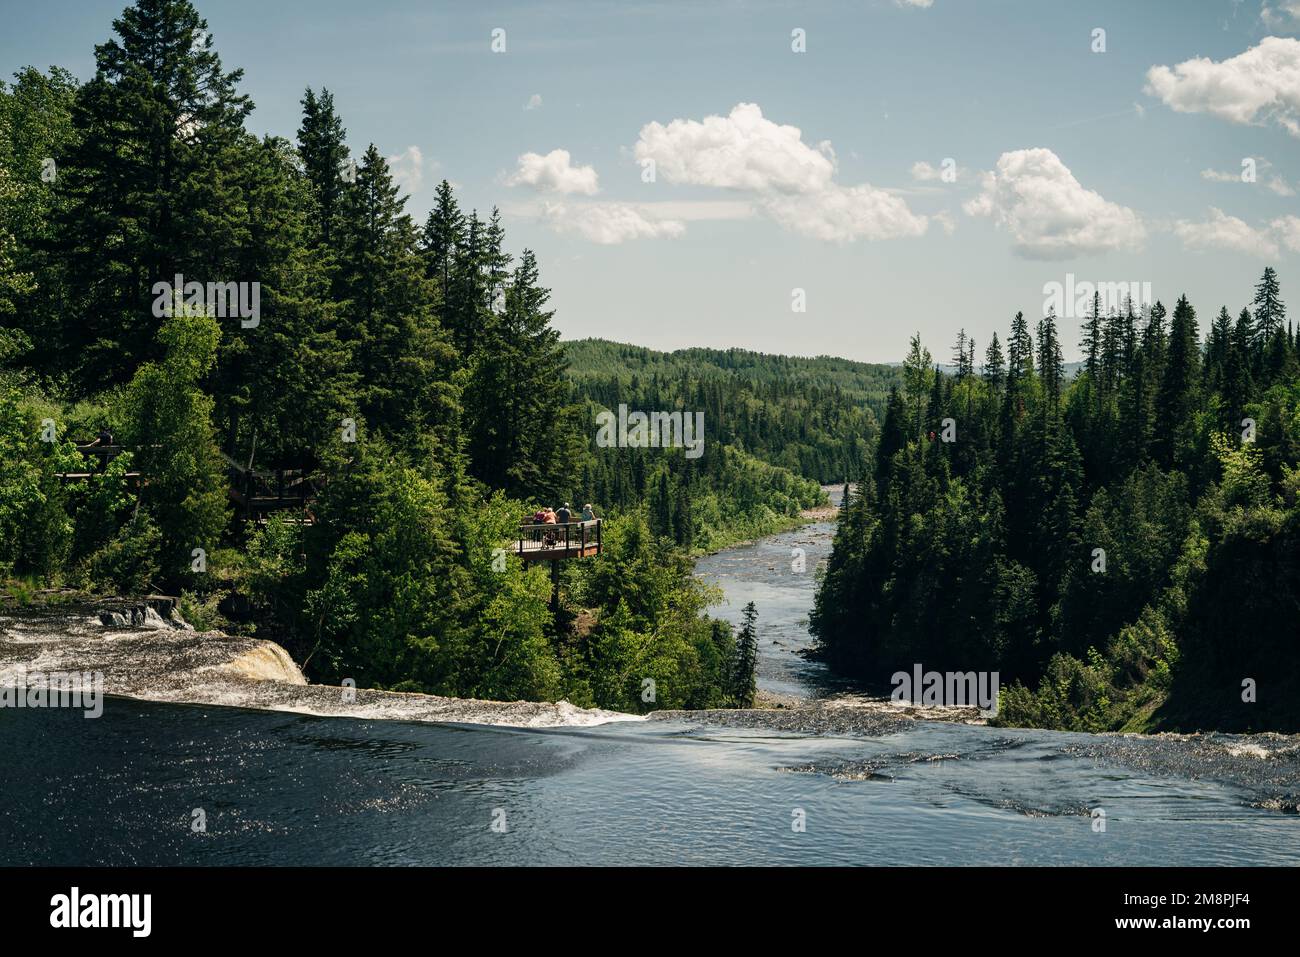 Cascate di Kakabeka a Thunder Bay, Ontario settentrionale, Canada. Foto di alta qualità Foto Stock